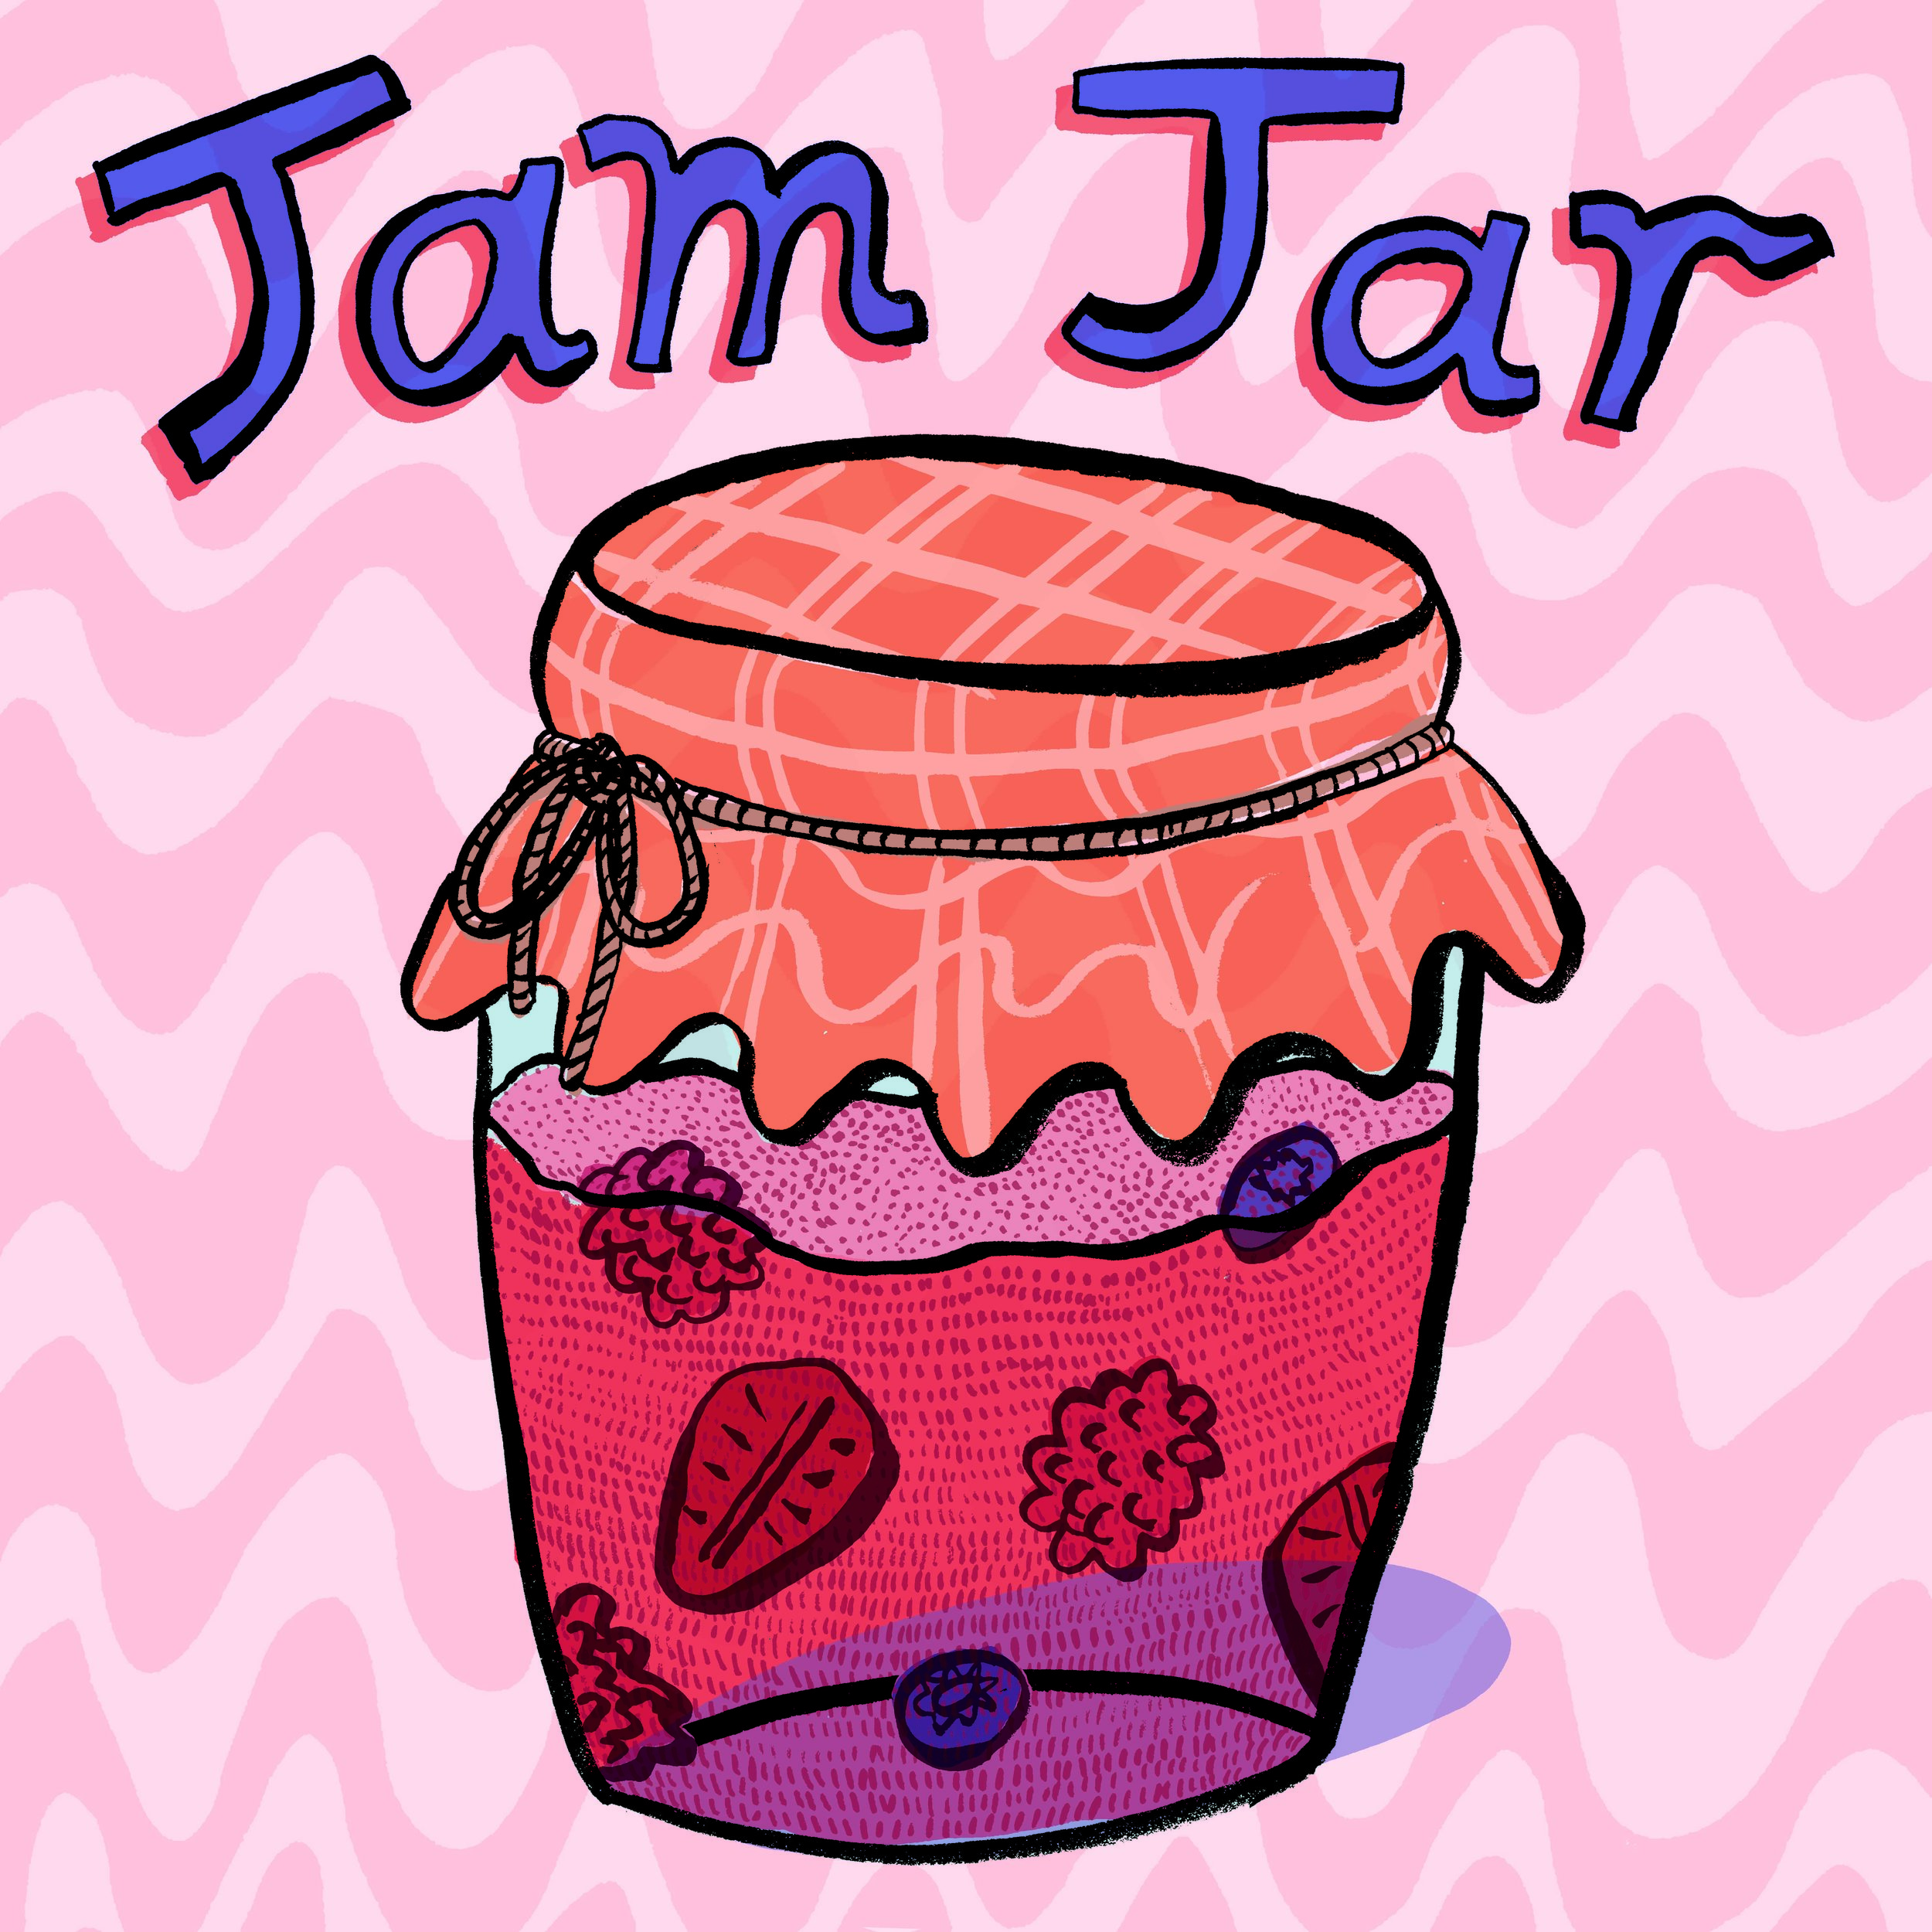 Jam Jar_front_low res.jpg